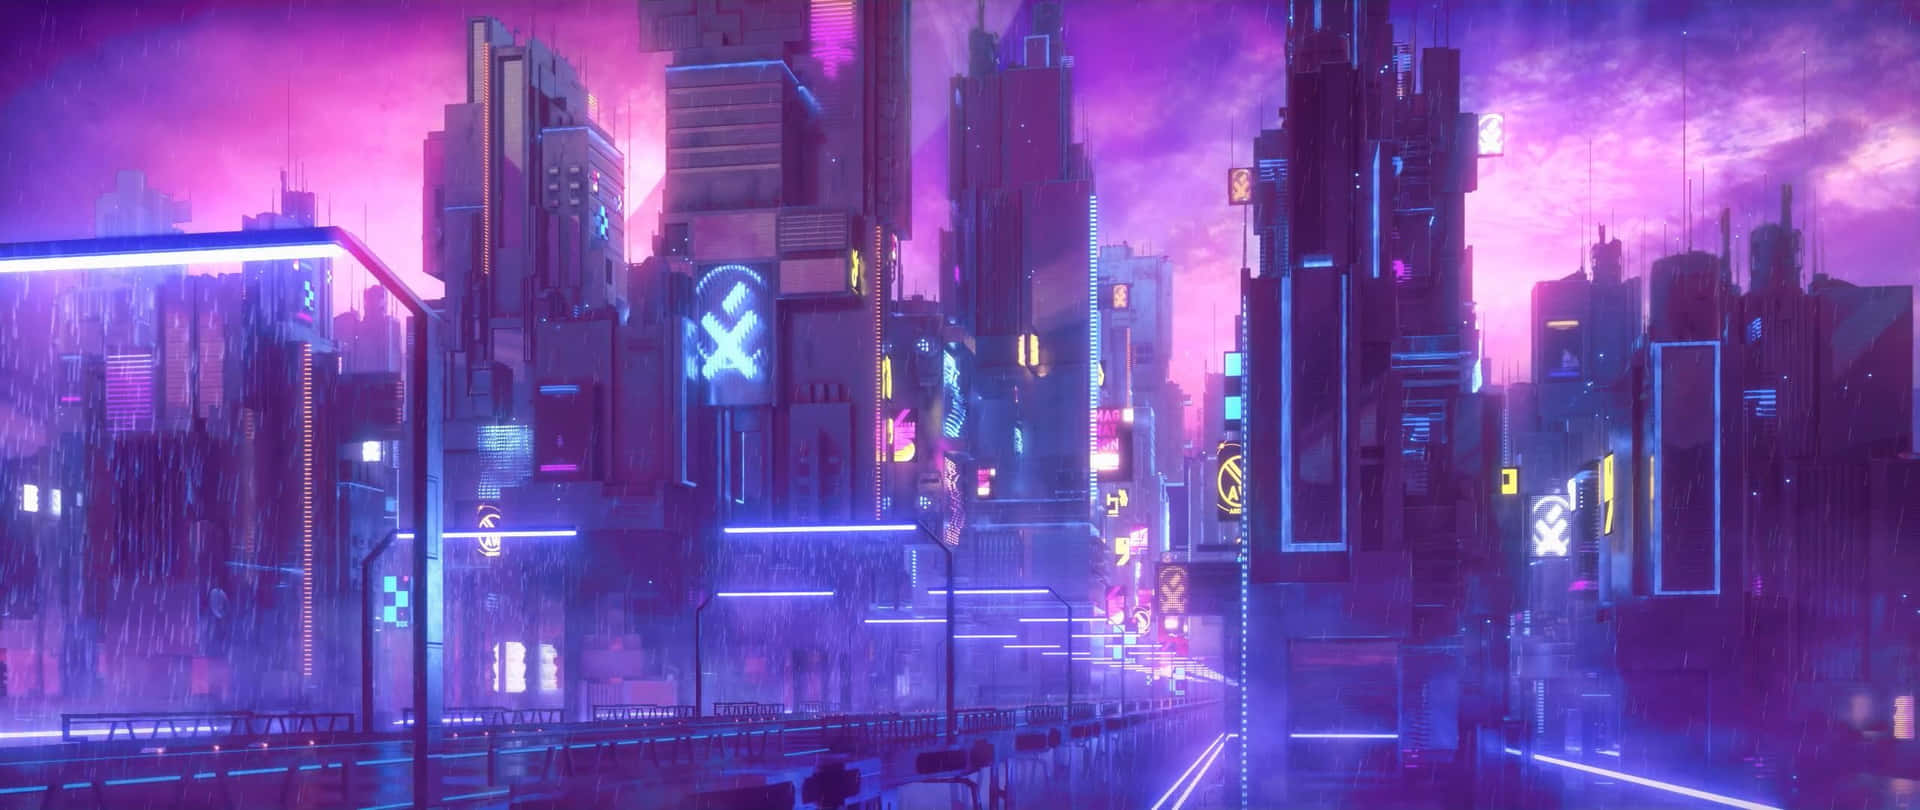 Futuristisk byudblik med glødende neonlygter. Wallpaper